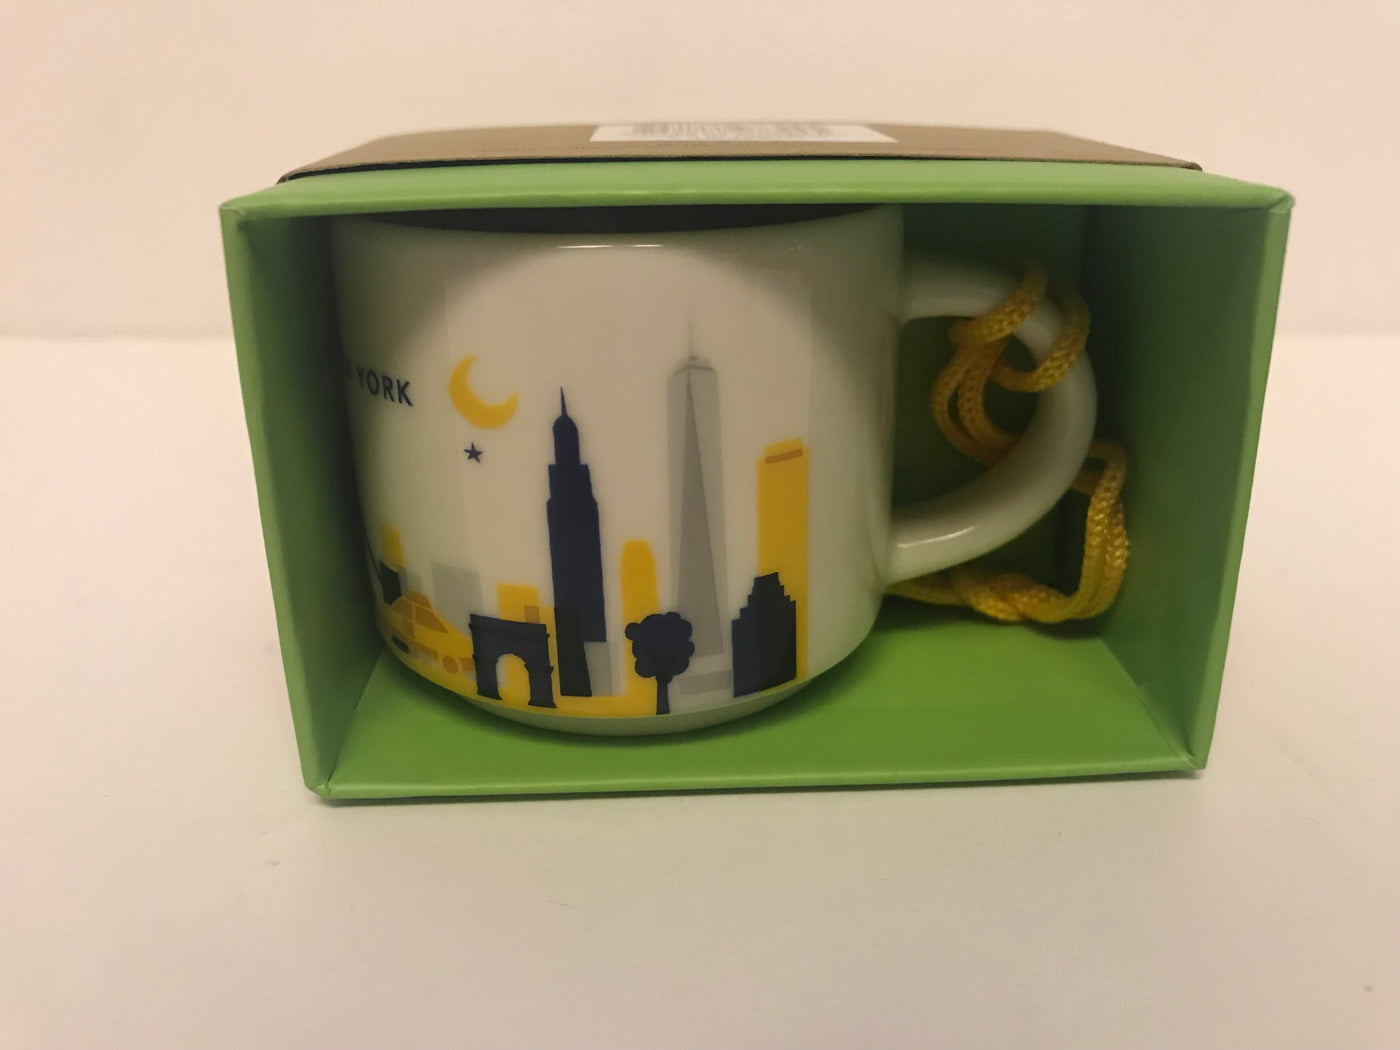 Starbucks Coffee You Are Here New York Ceramic Mug Ornament New with Box